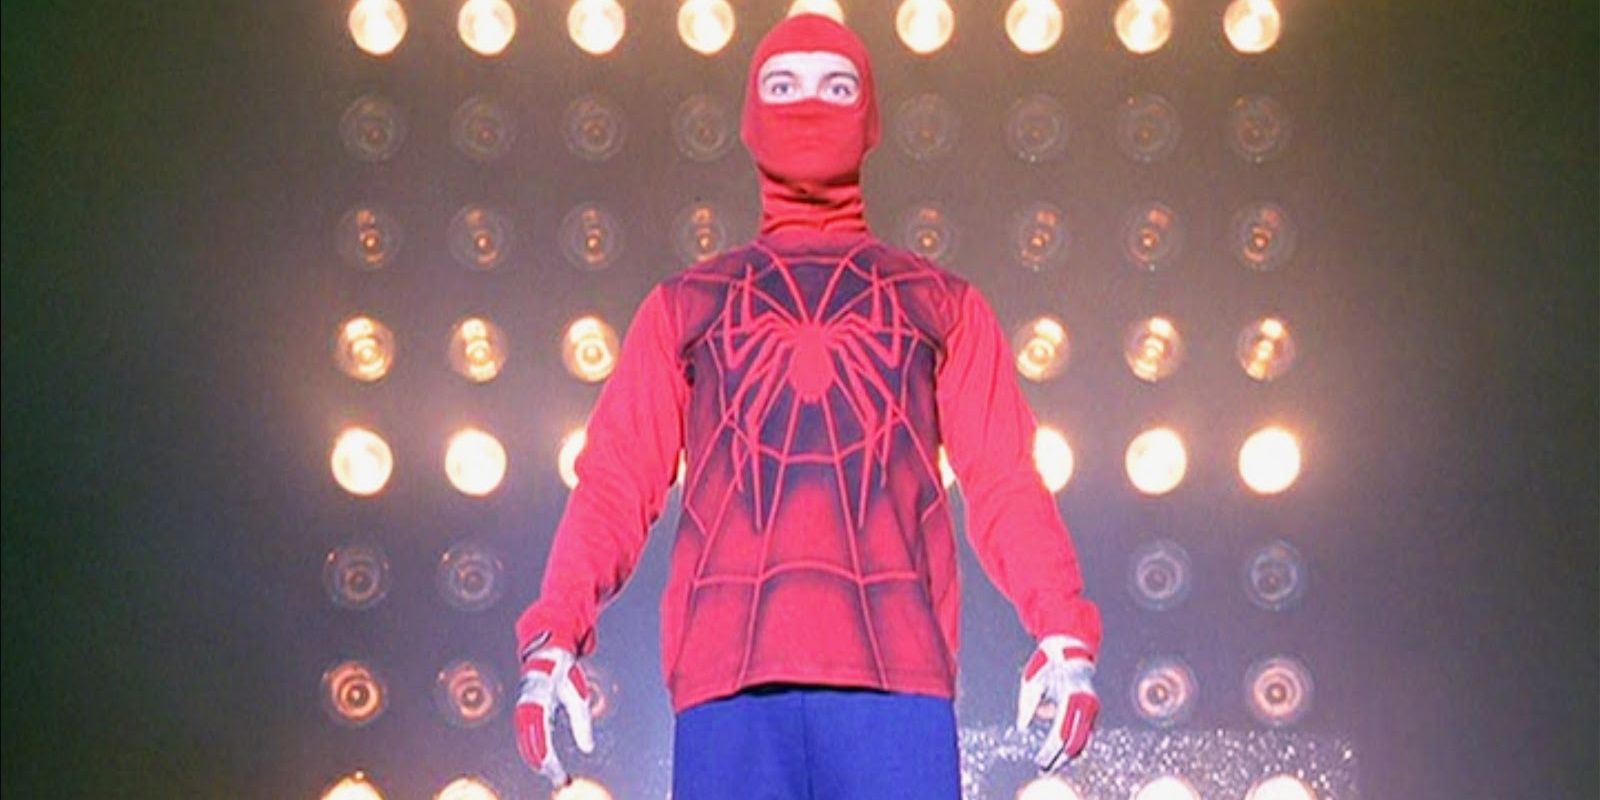 Tobey Maguire's Spider-Man wrestling suit in Sam Raimi's Spider-Man film.